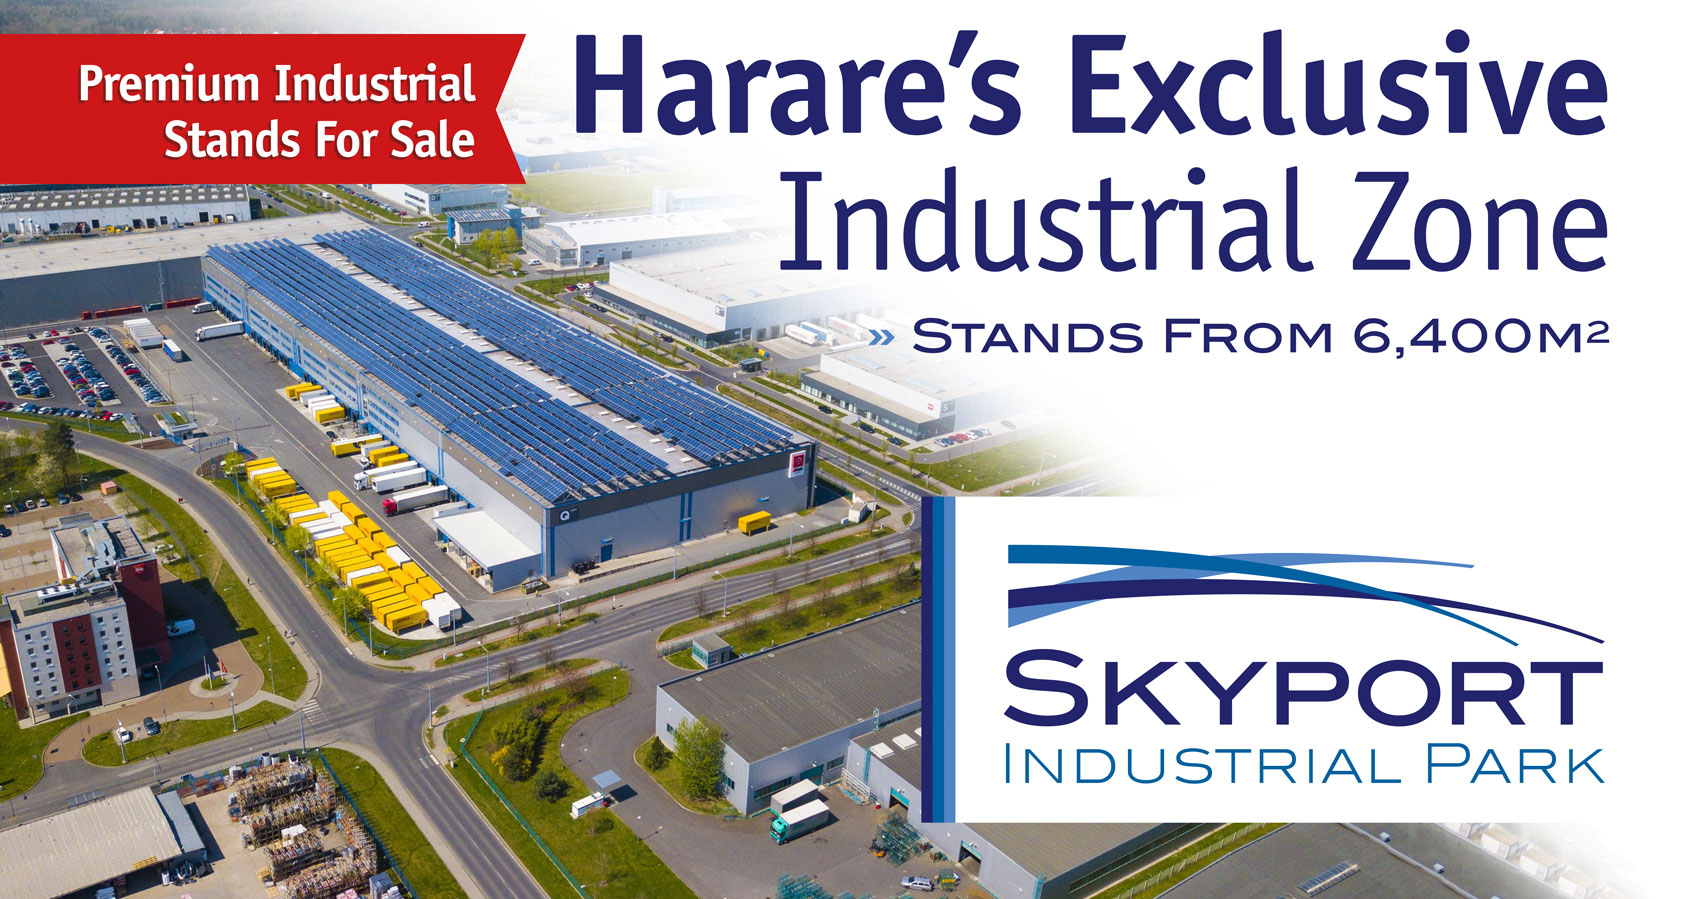 skyport-industrial-park-harare-exclusive-industrial-zone